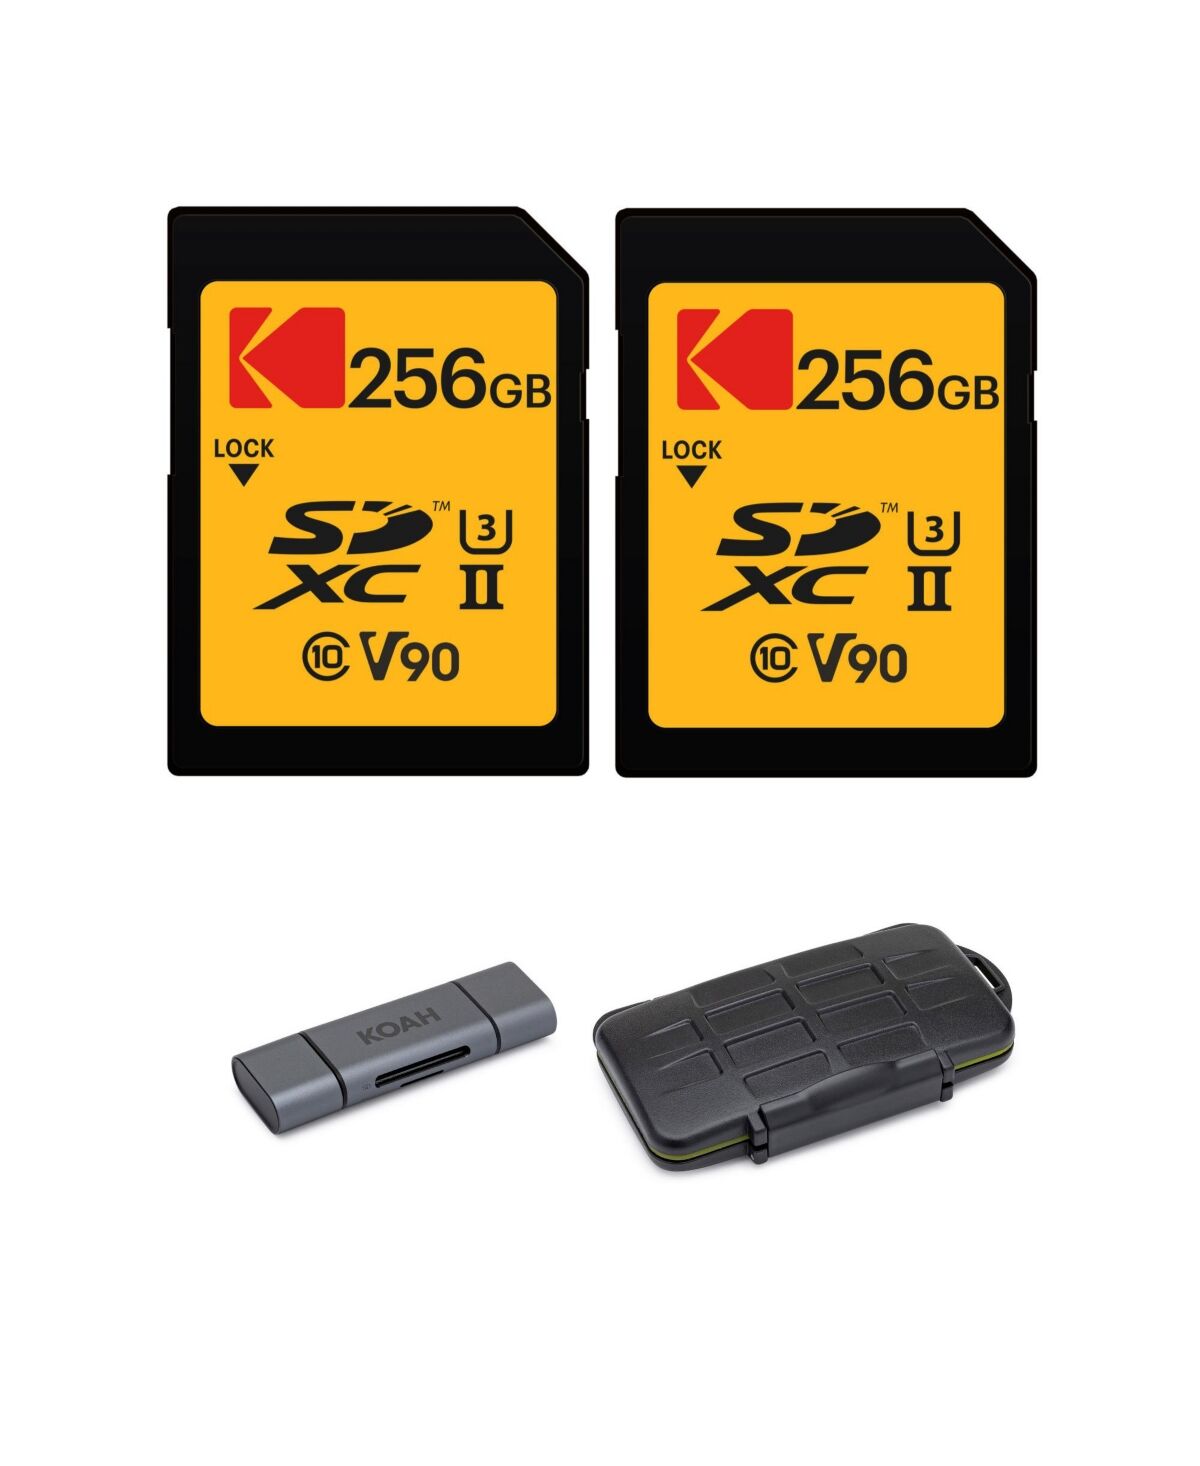 Kodak 256GB Uhs-ii U3 V90 Ultra Pro Sdxc Memory Card (2-Pack) Bundle - Yellow